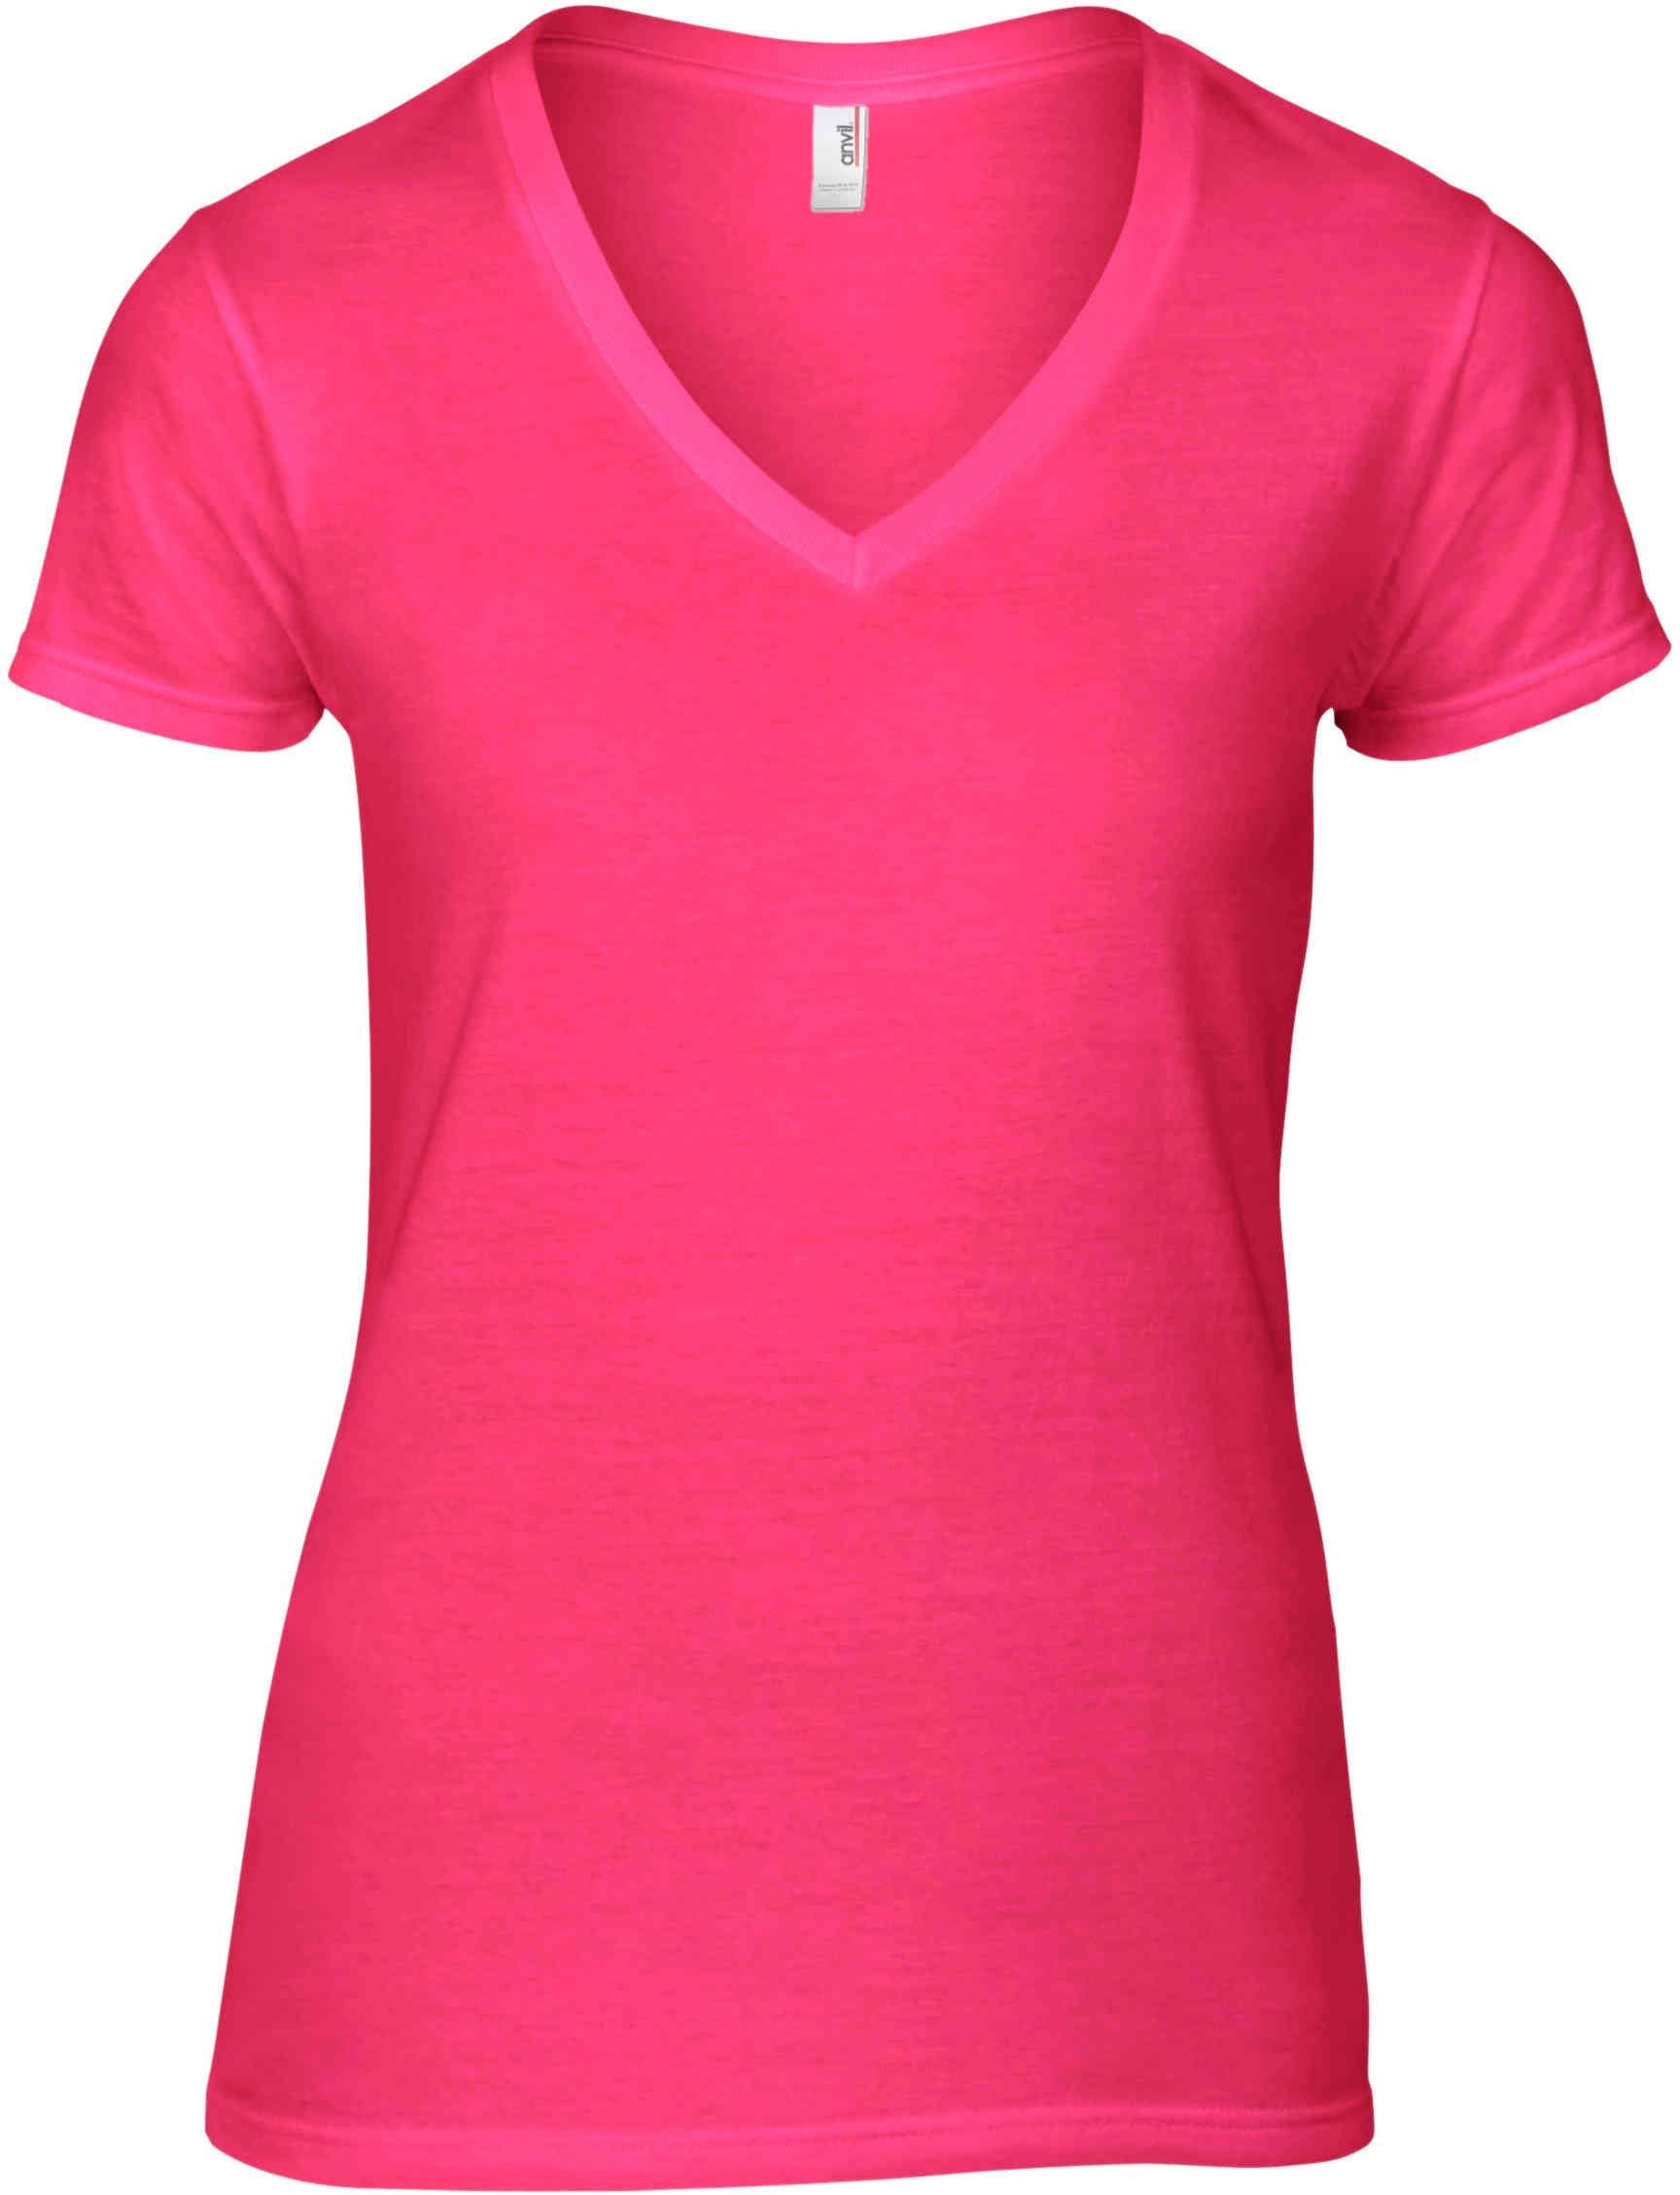 Tee Shirt Personnalis Women S Fashion Basic V Neck Tee Anvil Hot Pink